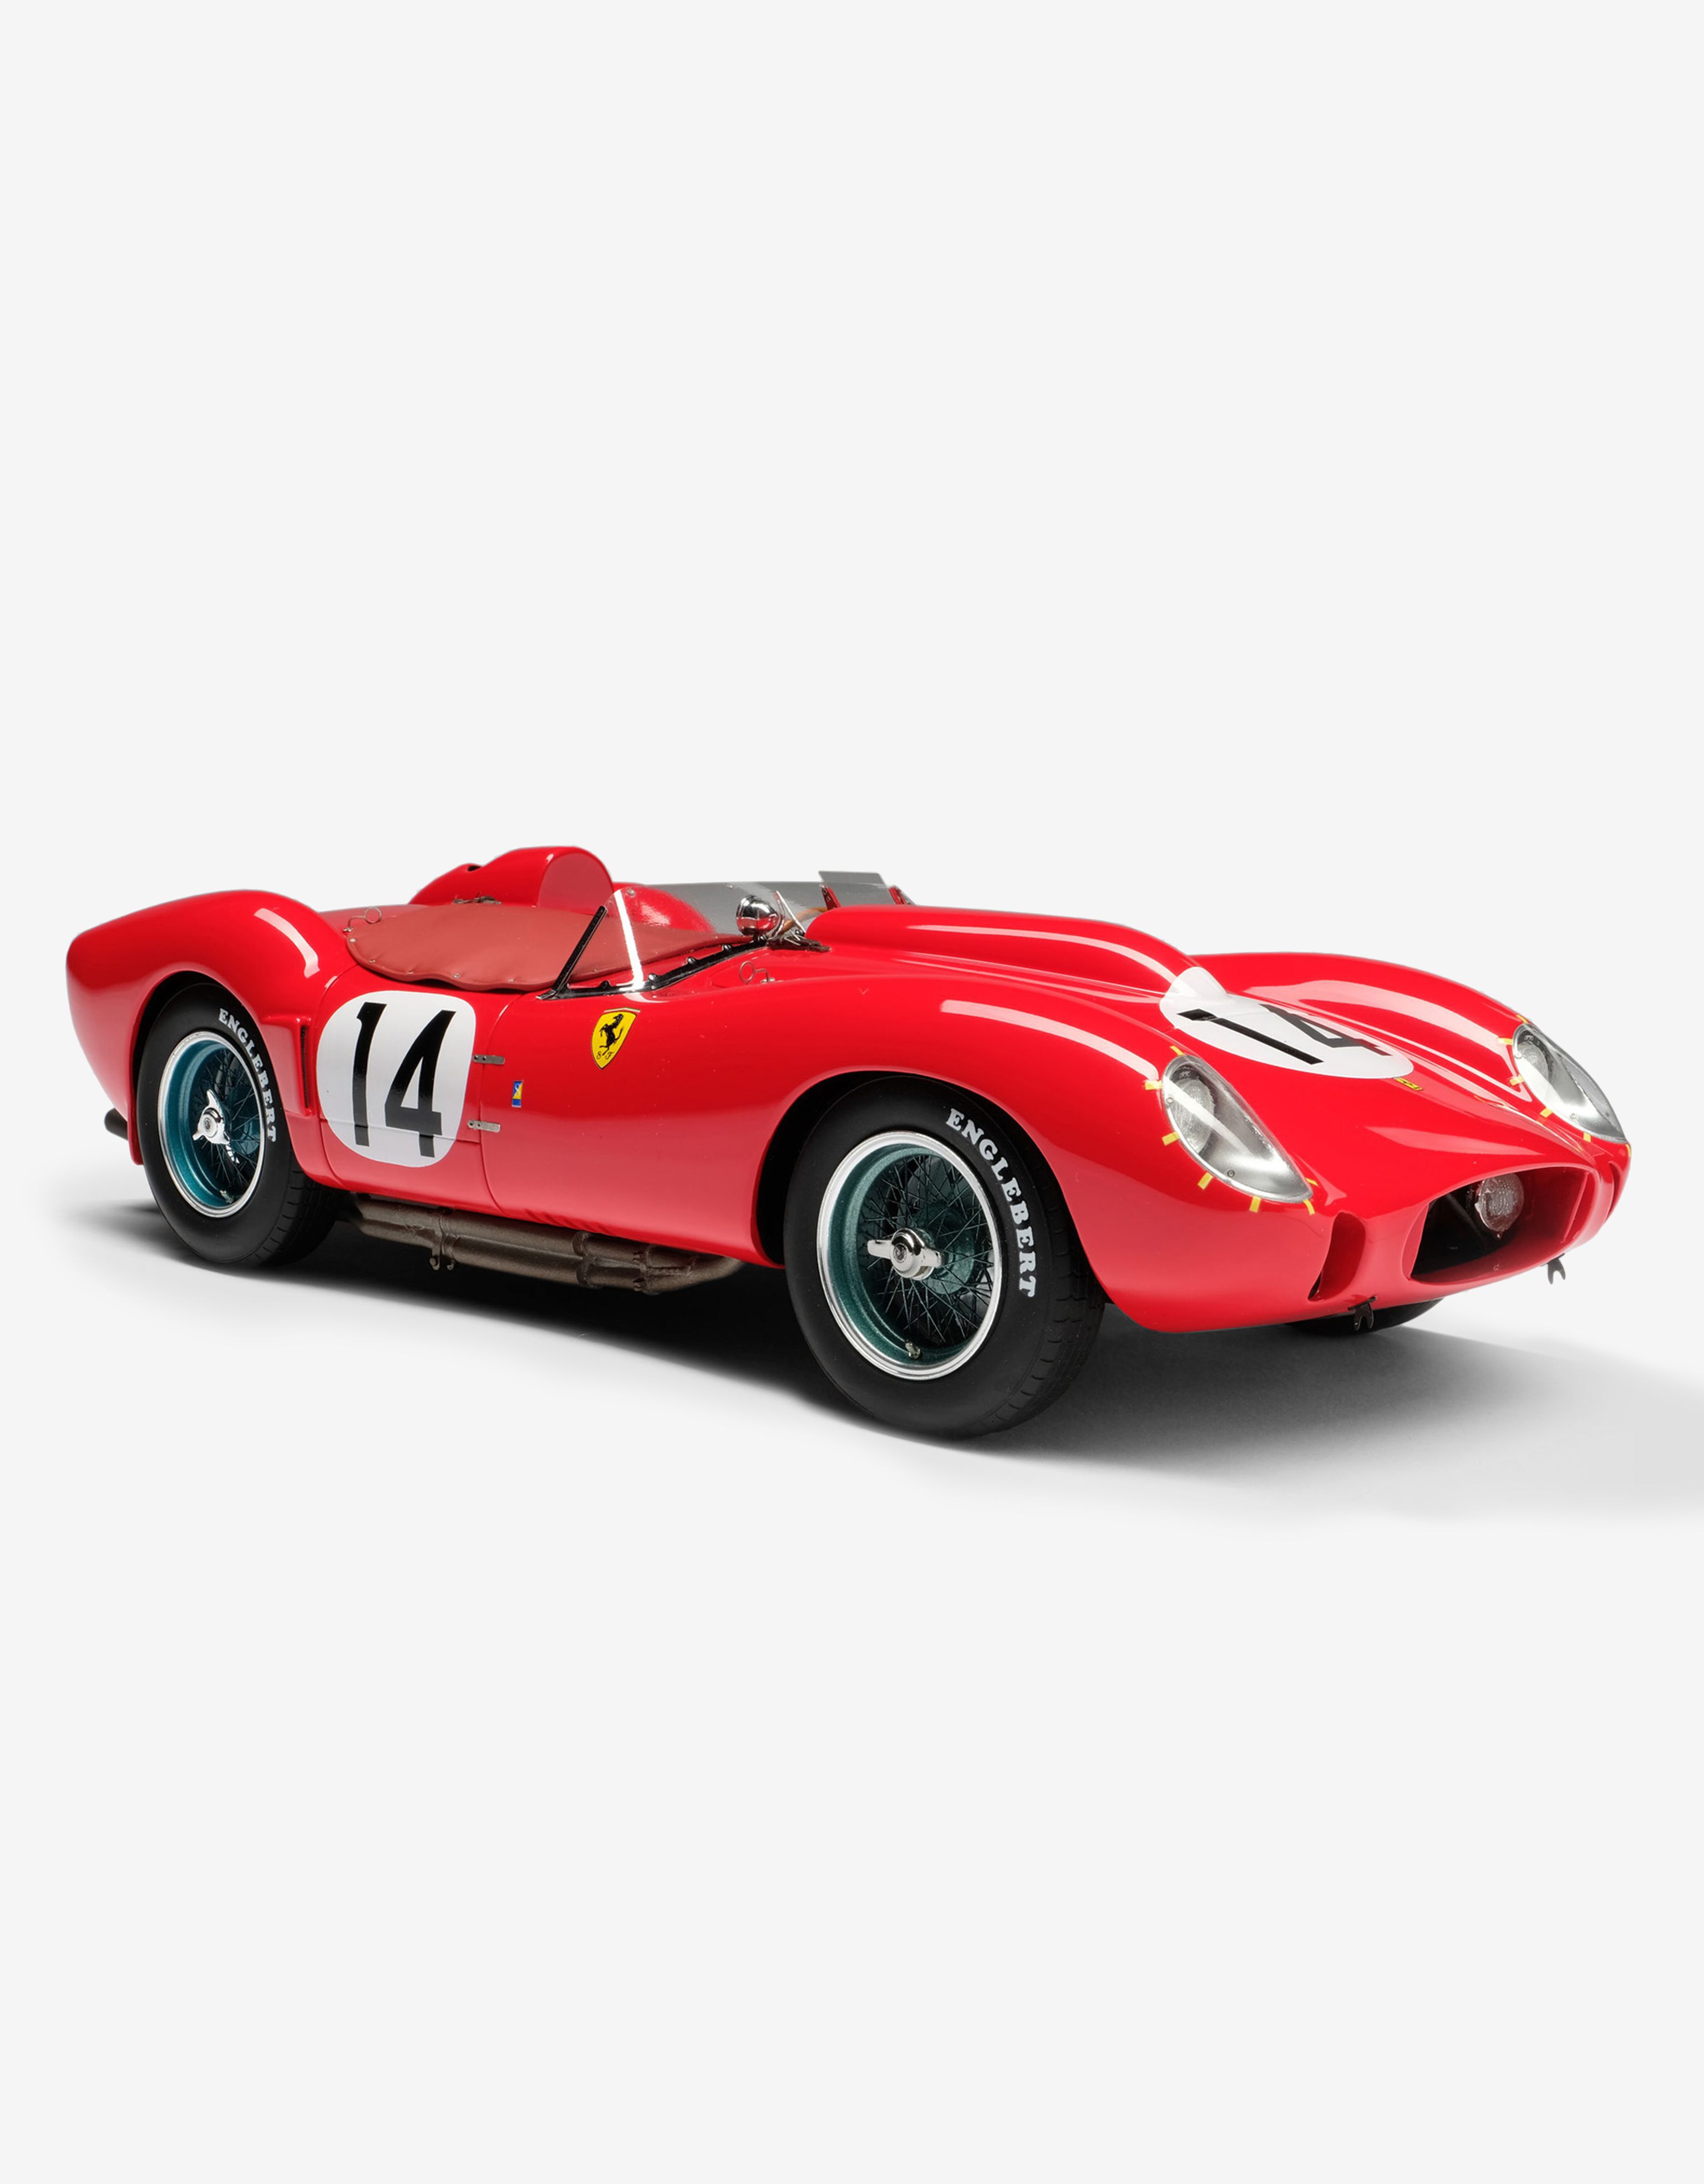 ${brand} Miniatura Ferrari 250 LM 1965 Le Mans a escala 1:18 ${colorDescription} ${masterID}